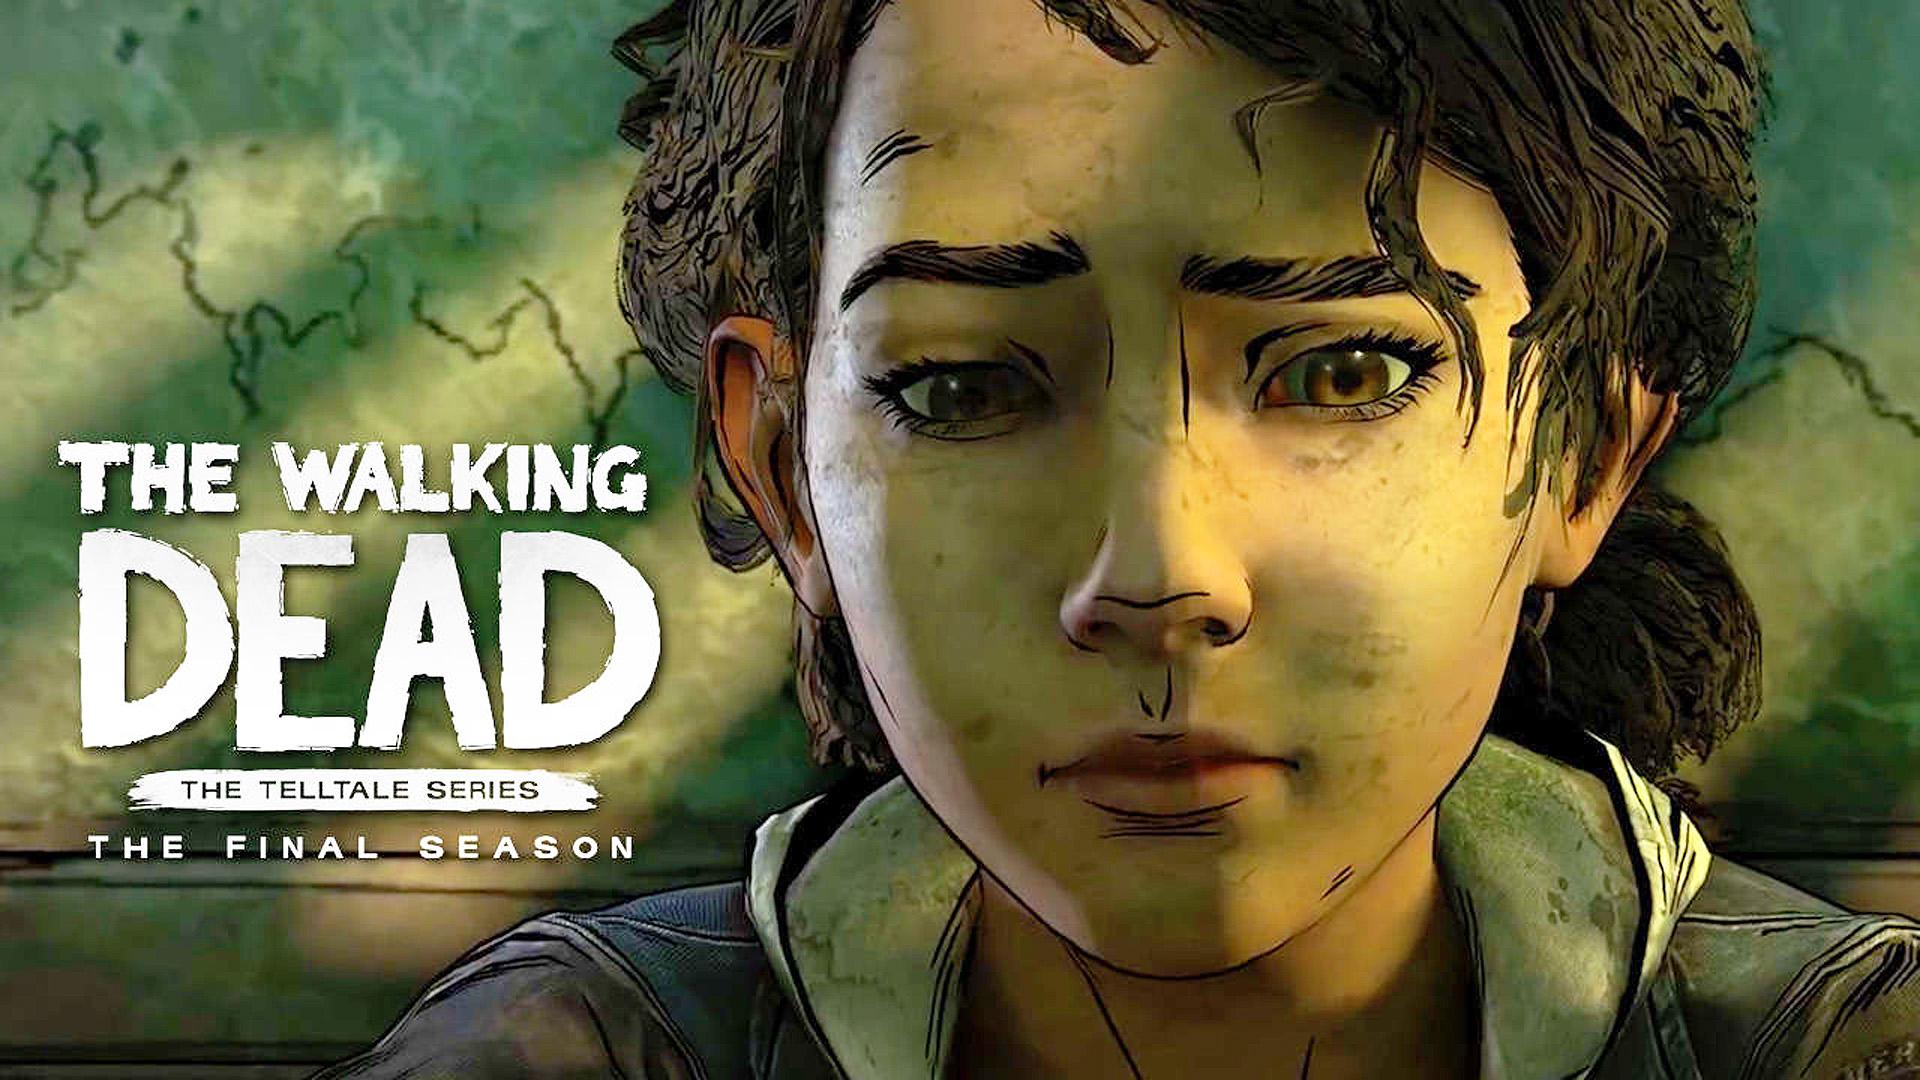 The Walking Dead: The Final Season Episode 3 Review